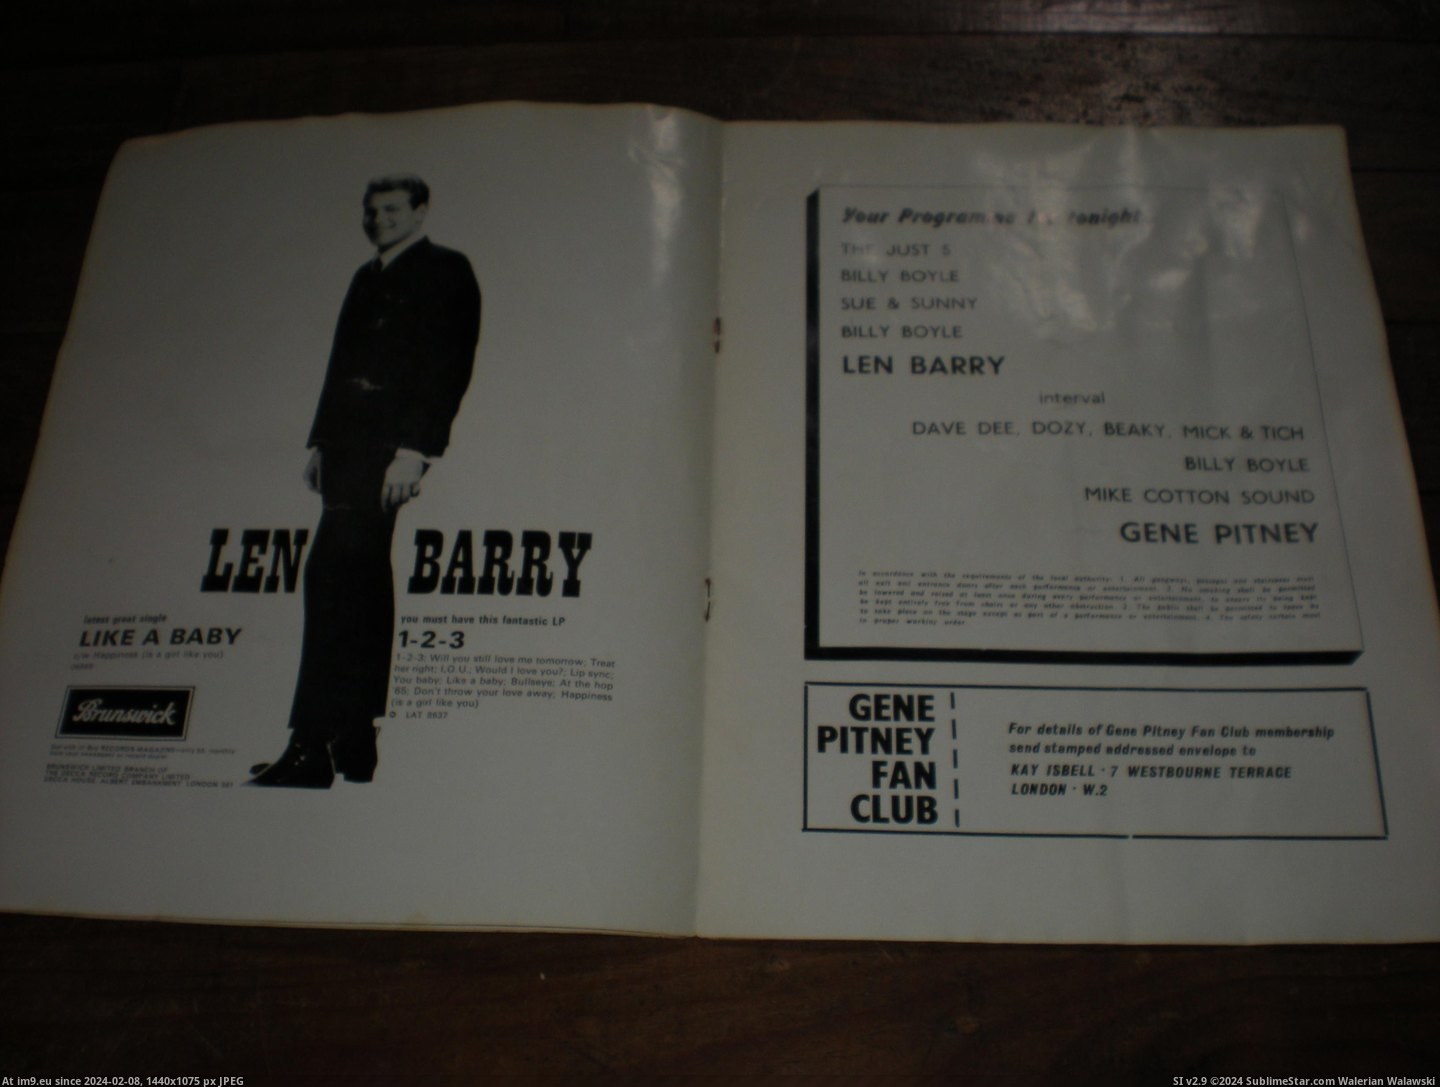 #Gene #Pitney #Prog Gene Pitney prog 4 Pic. (Изображение из альбом new 1))